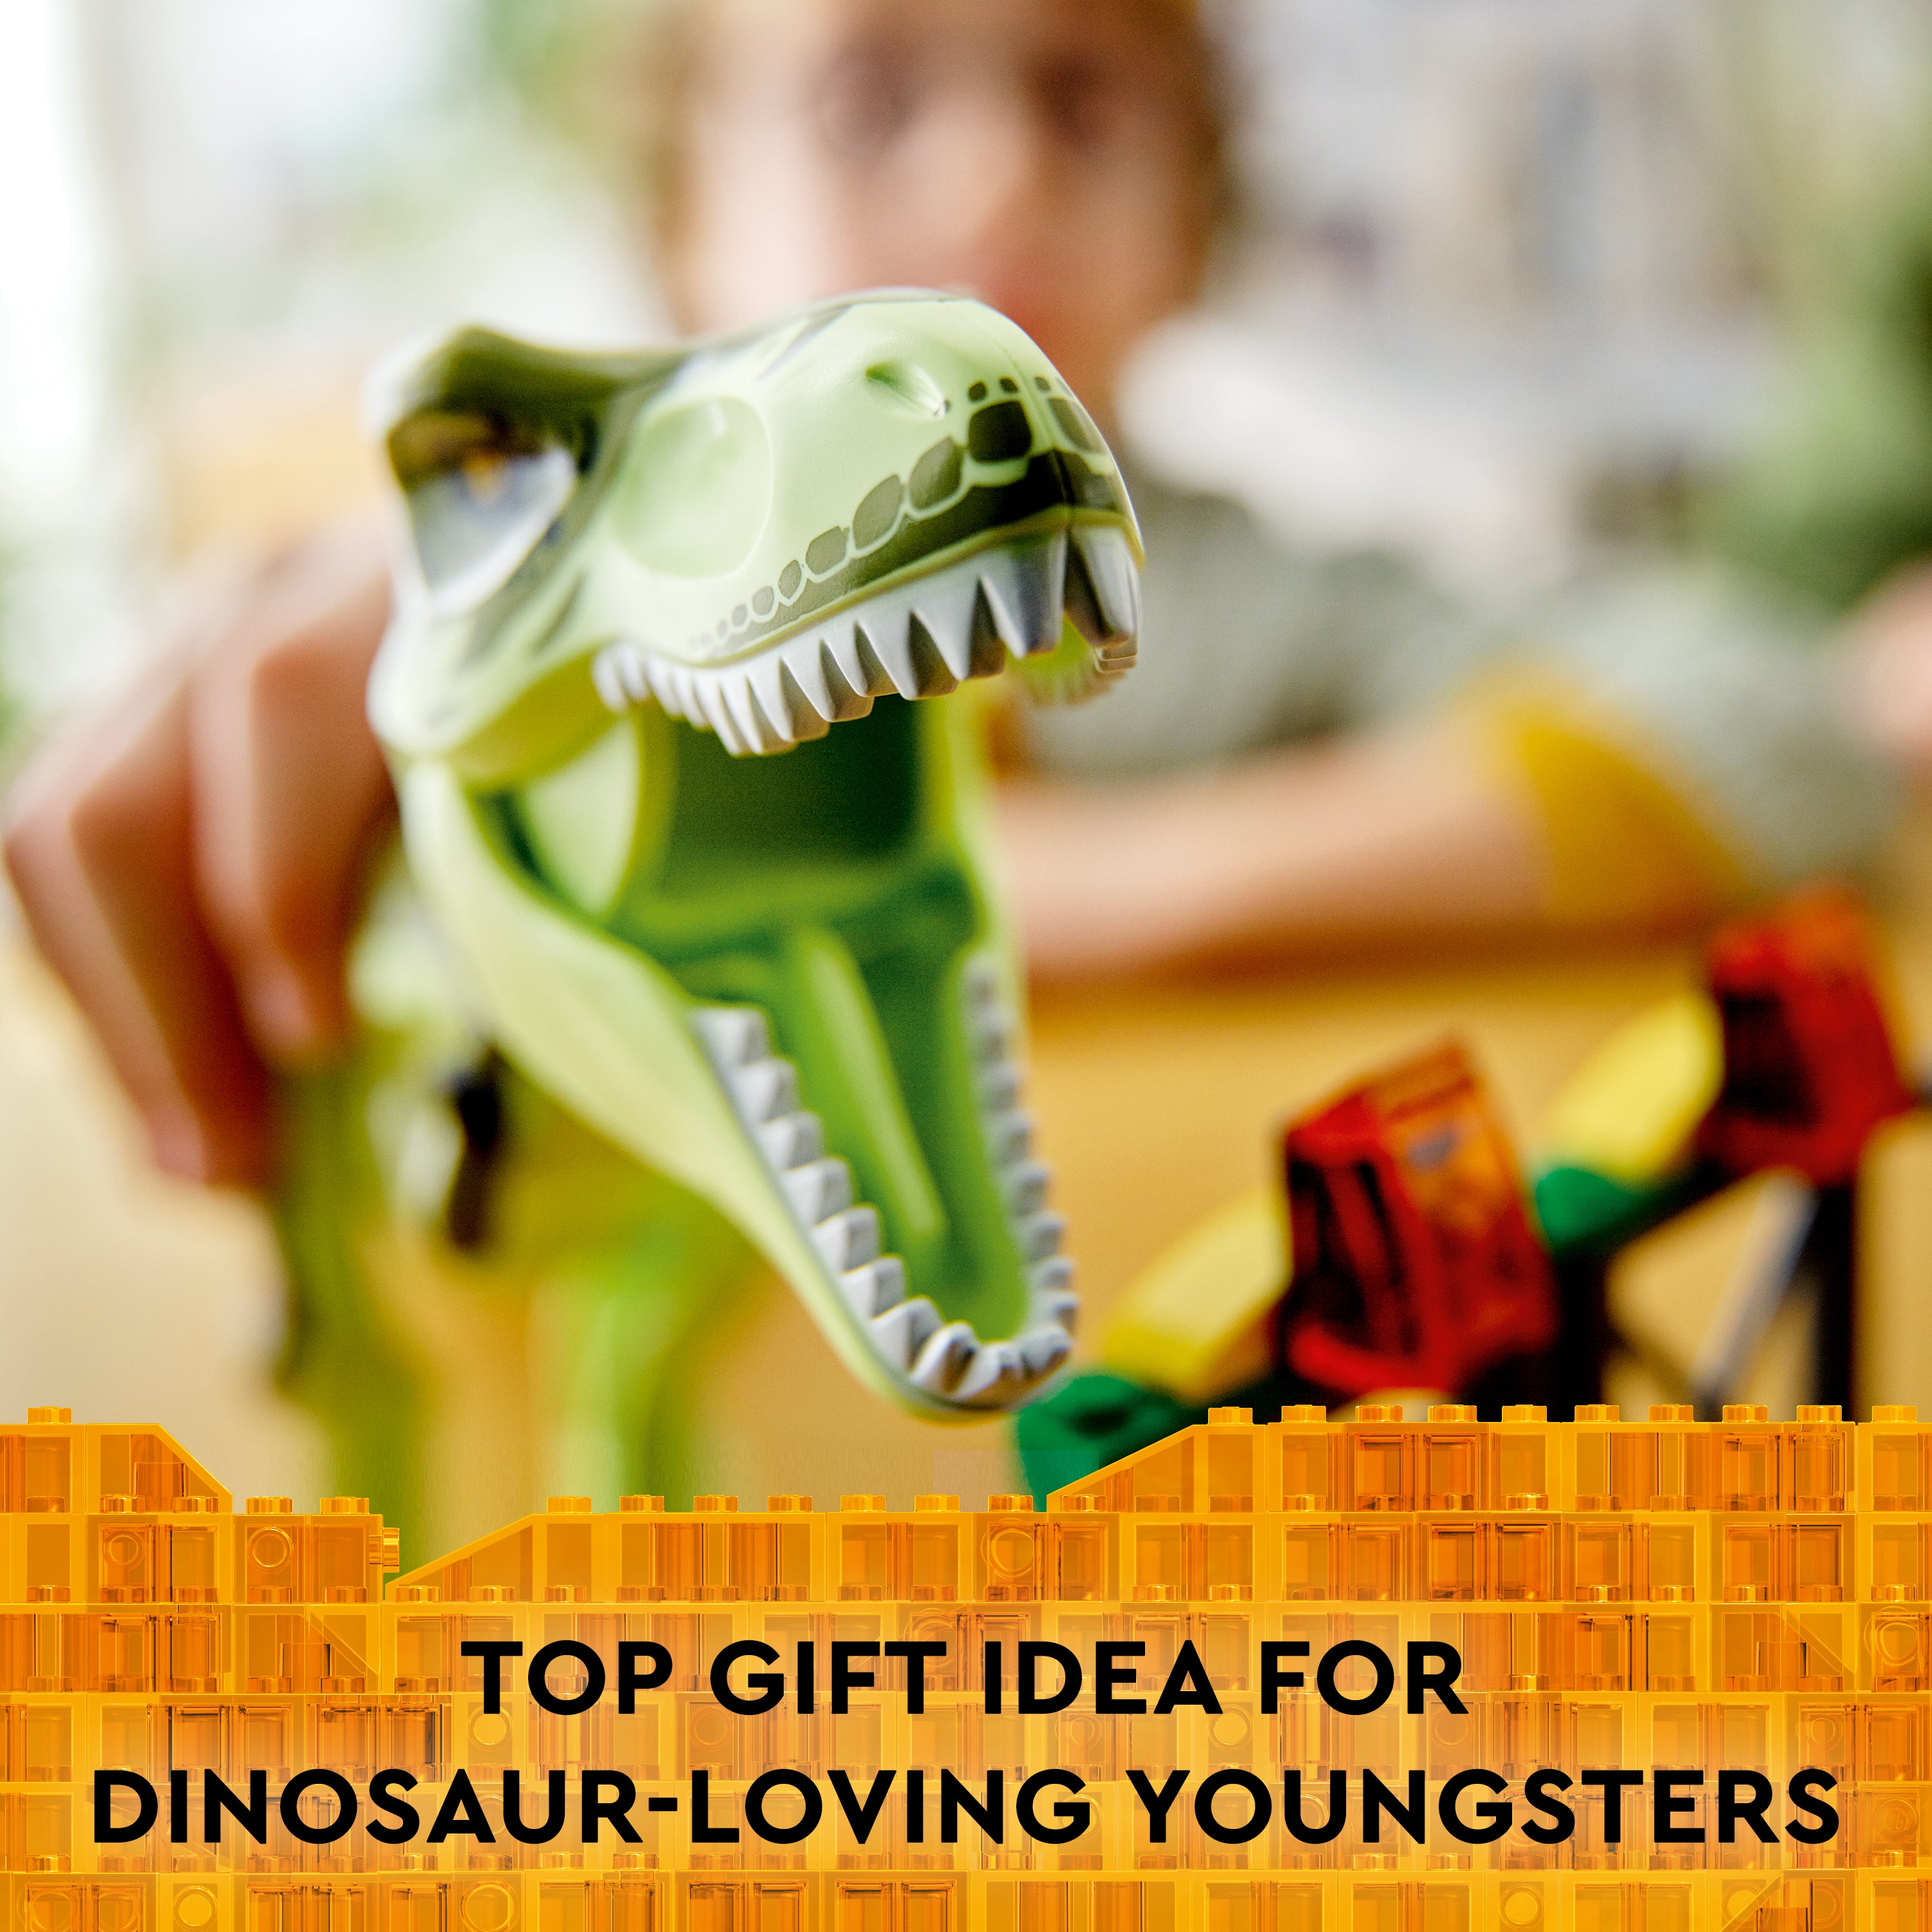 Lego 76944 T. rex Dinosaur Breakout